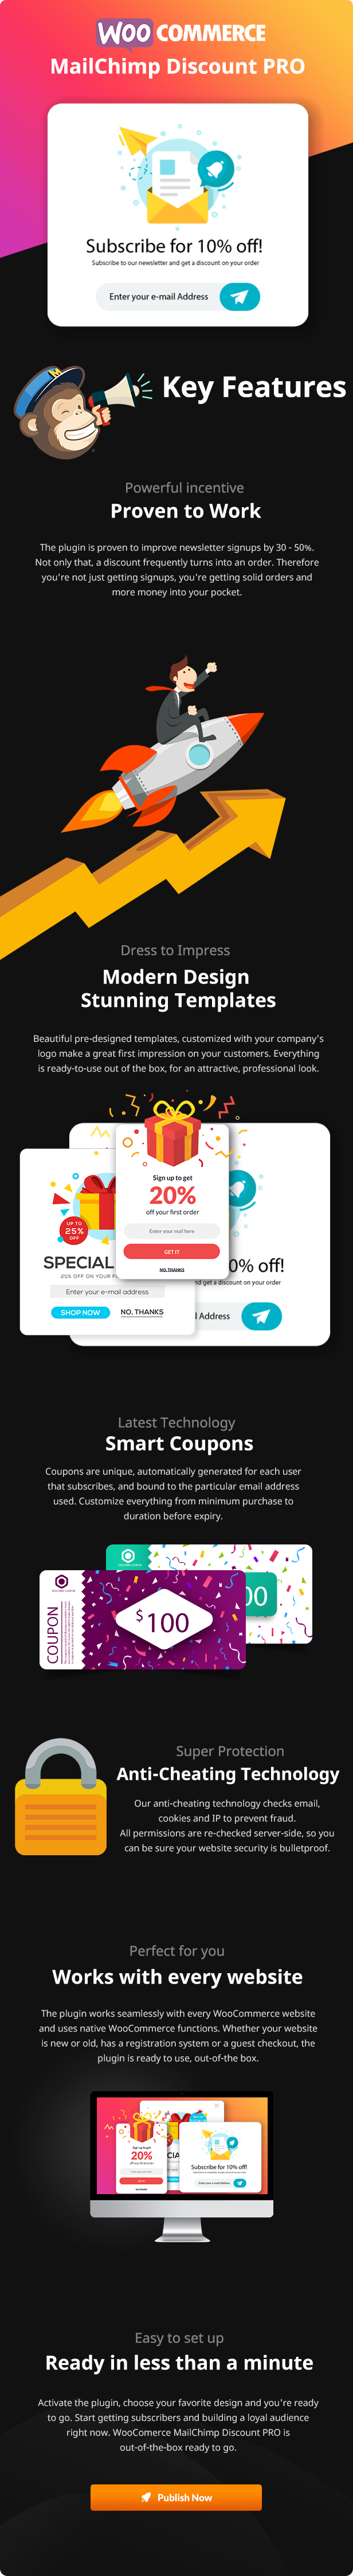 WooCommerce MailChimp Discount PRO - 2